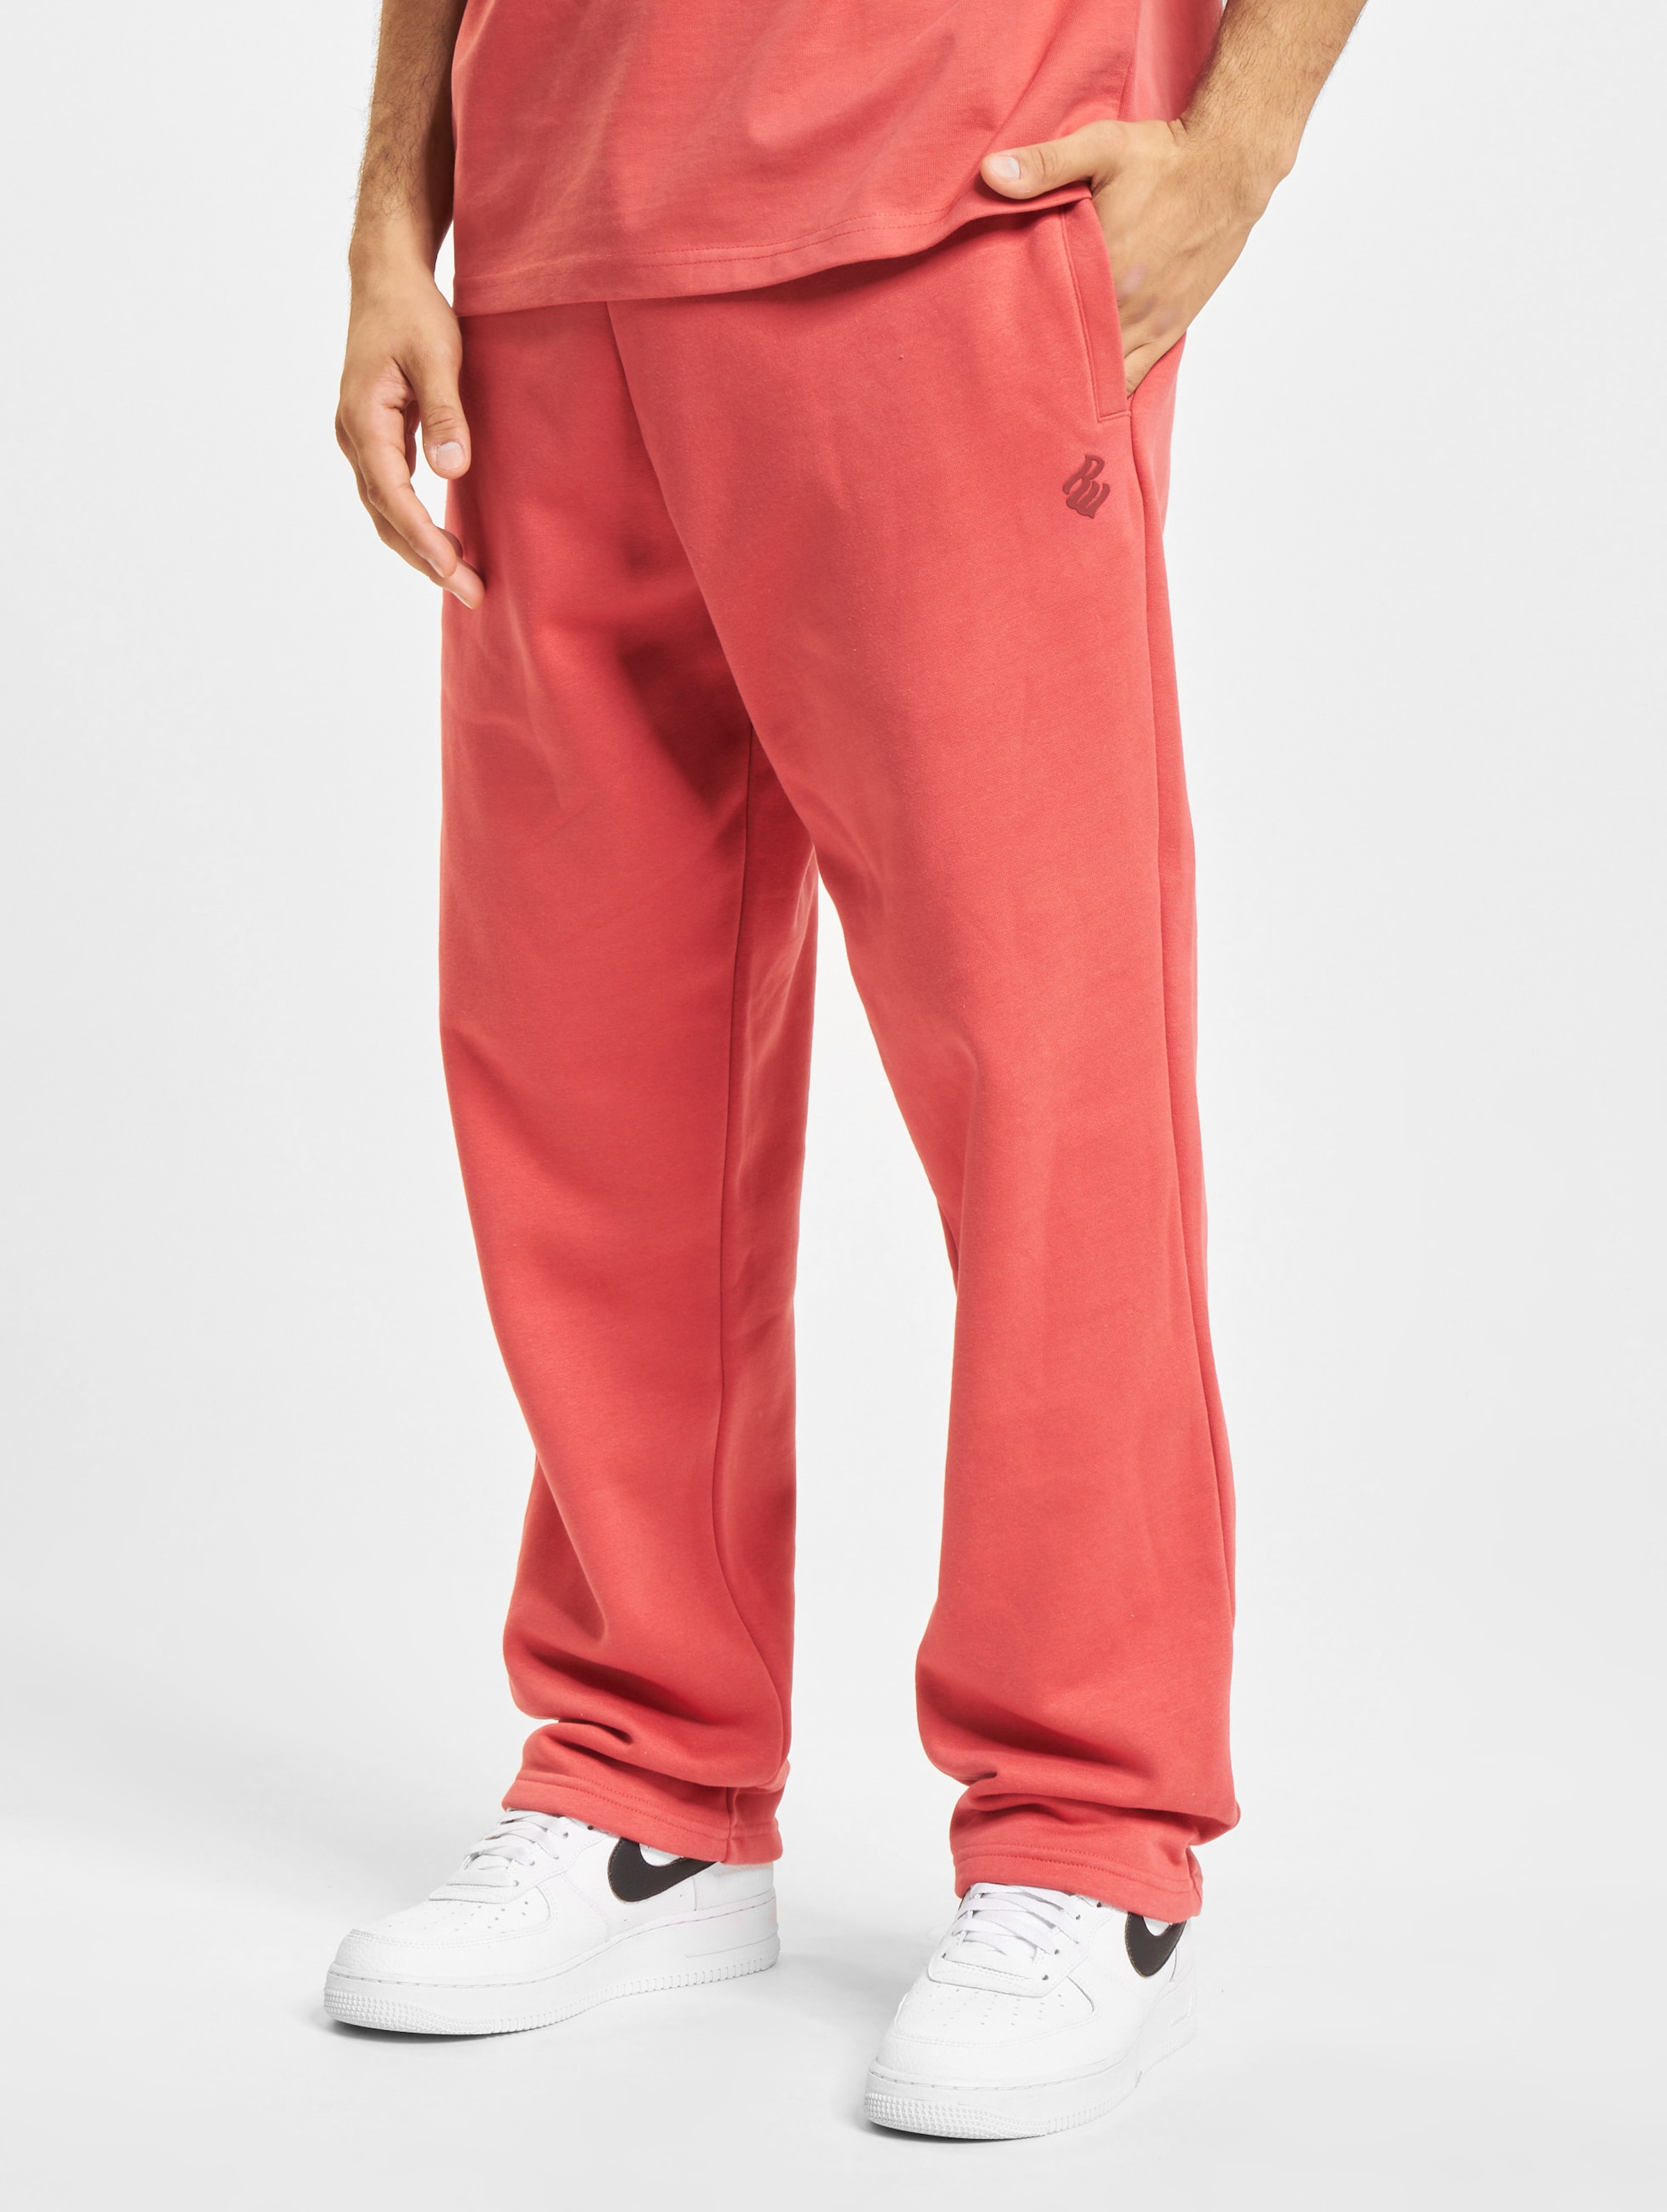 Rocawear Chili Jogginghosen Männer,Unisex op kleur rood, Maat 3XL